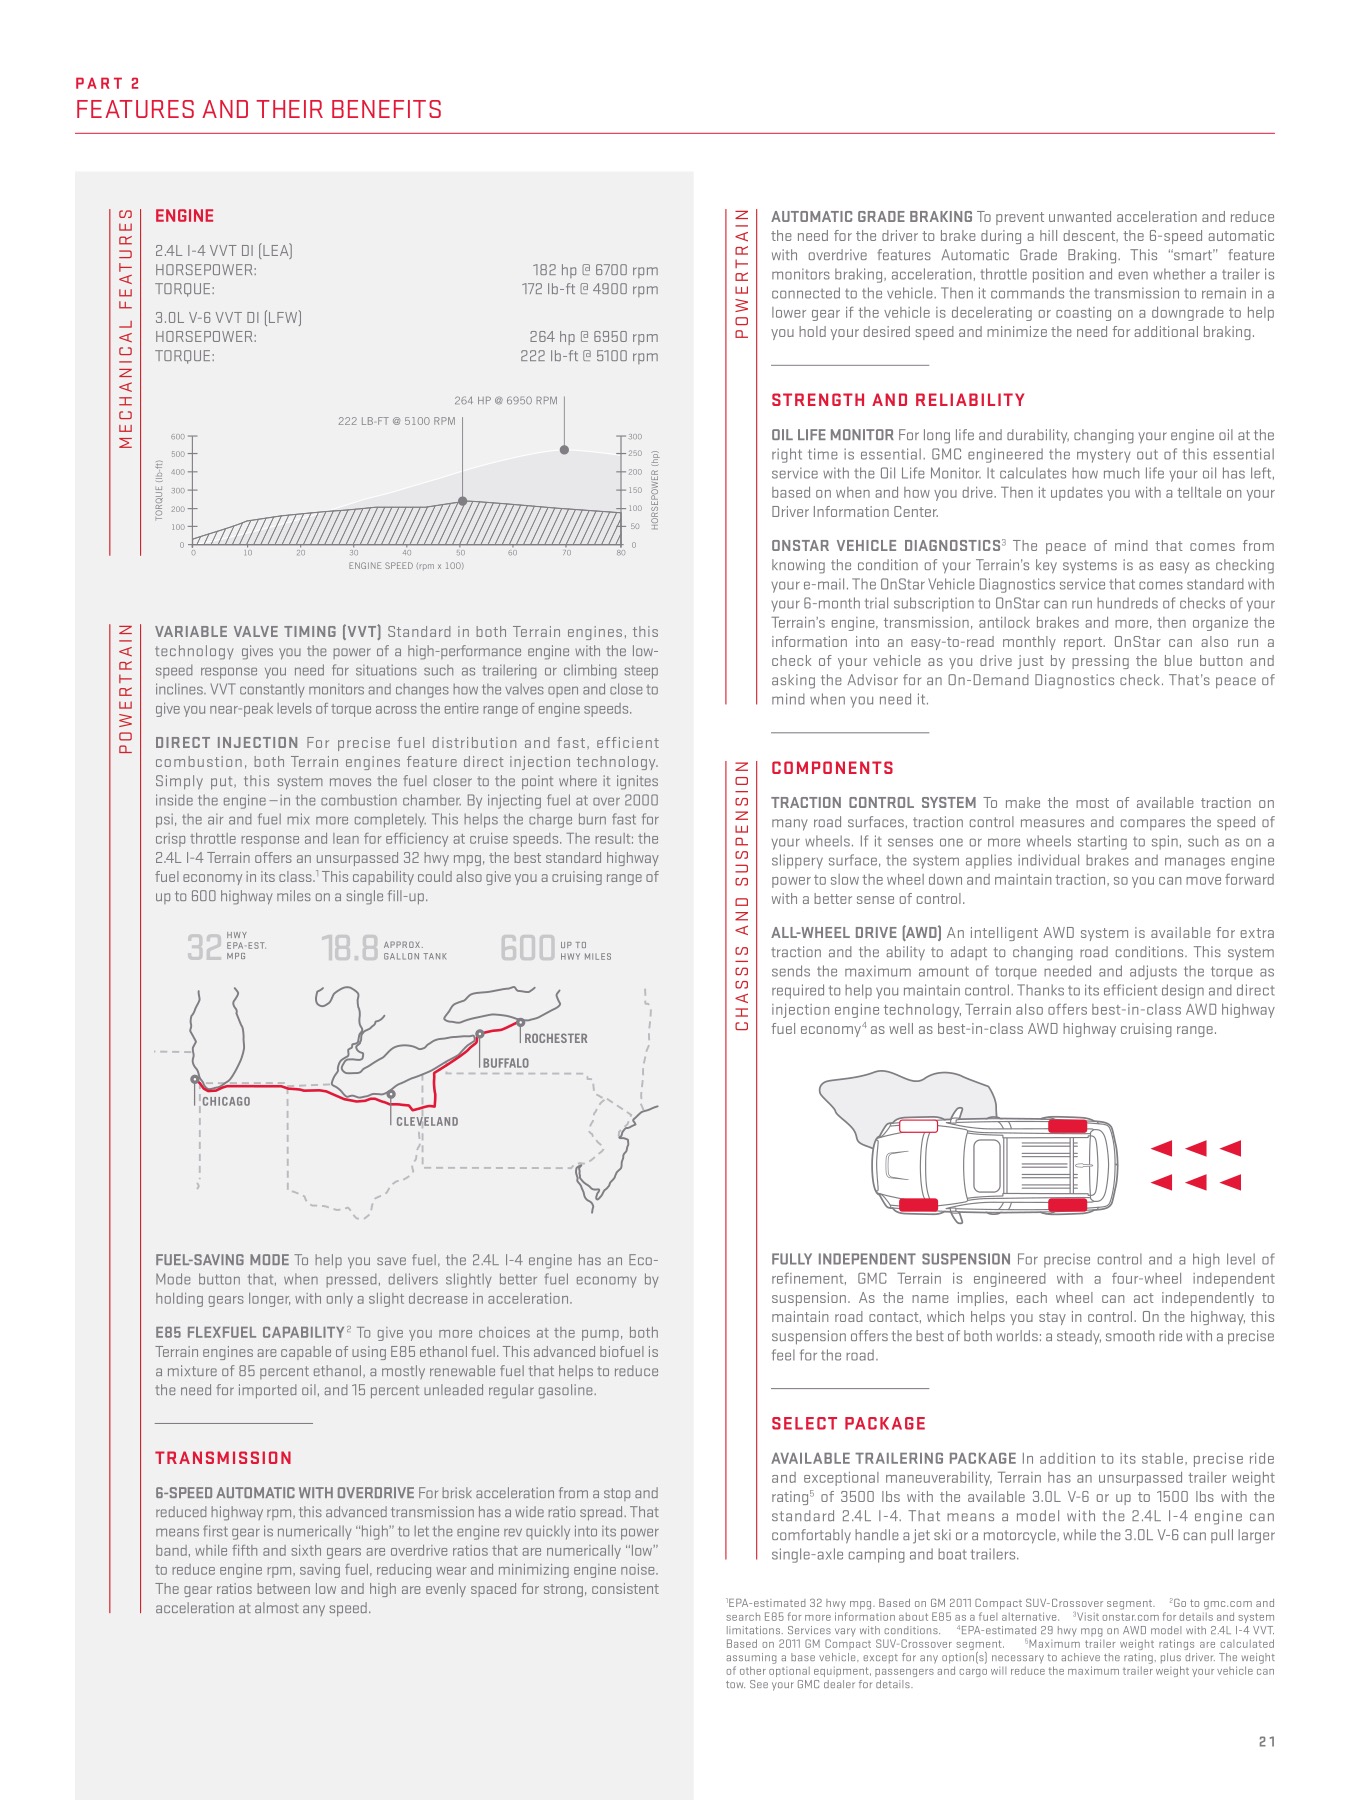 2012 GMC Terrain Brochure Page 18